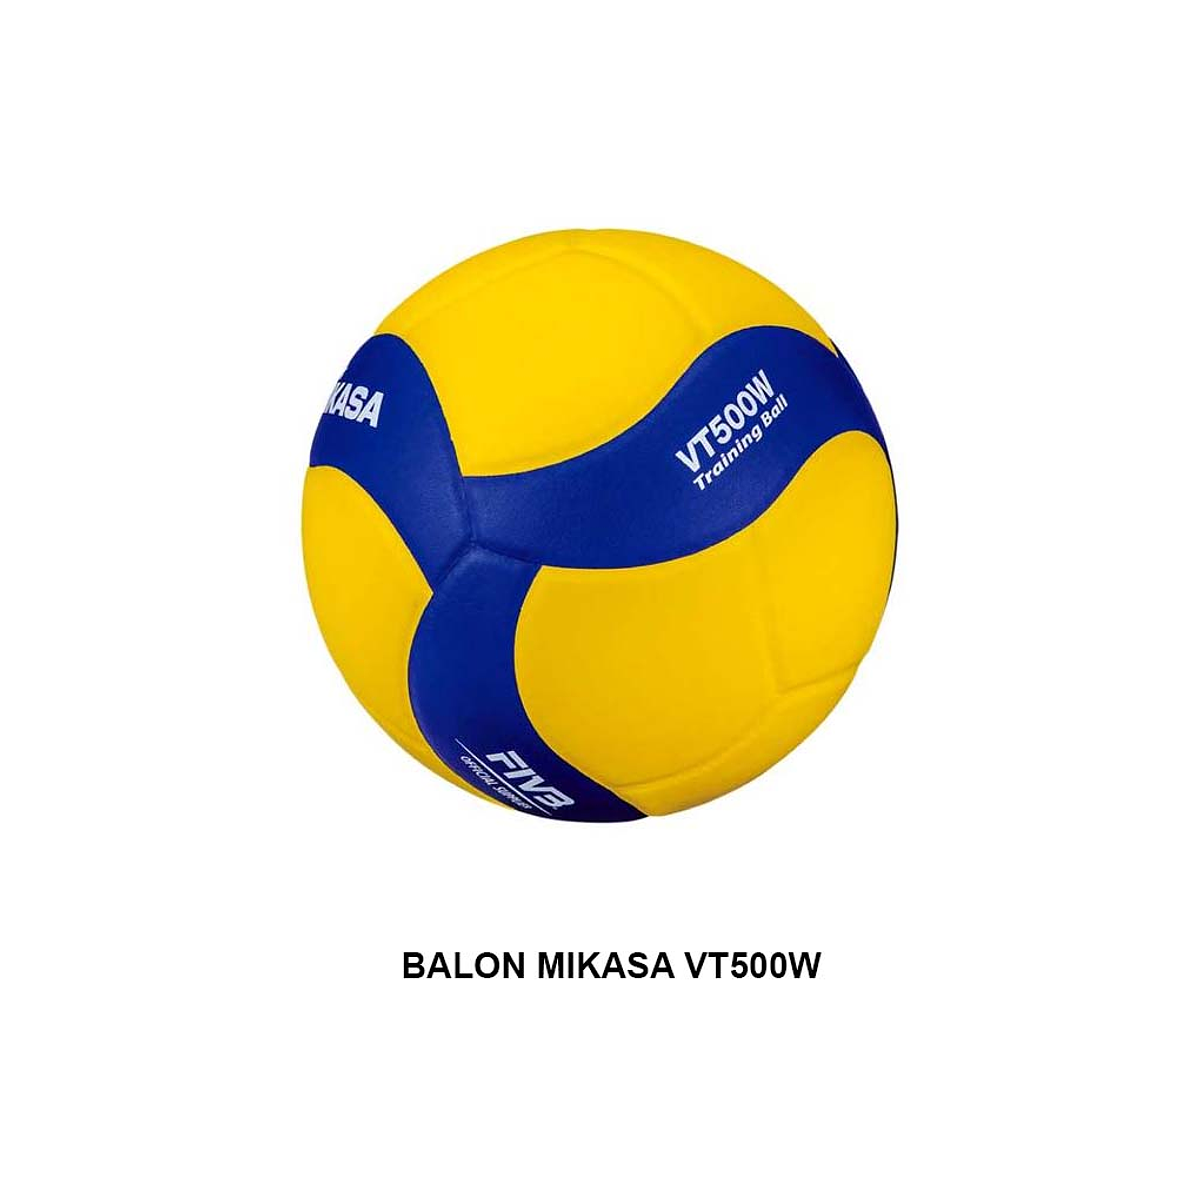 Balón Mikasa VT500W